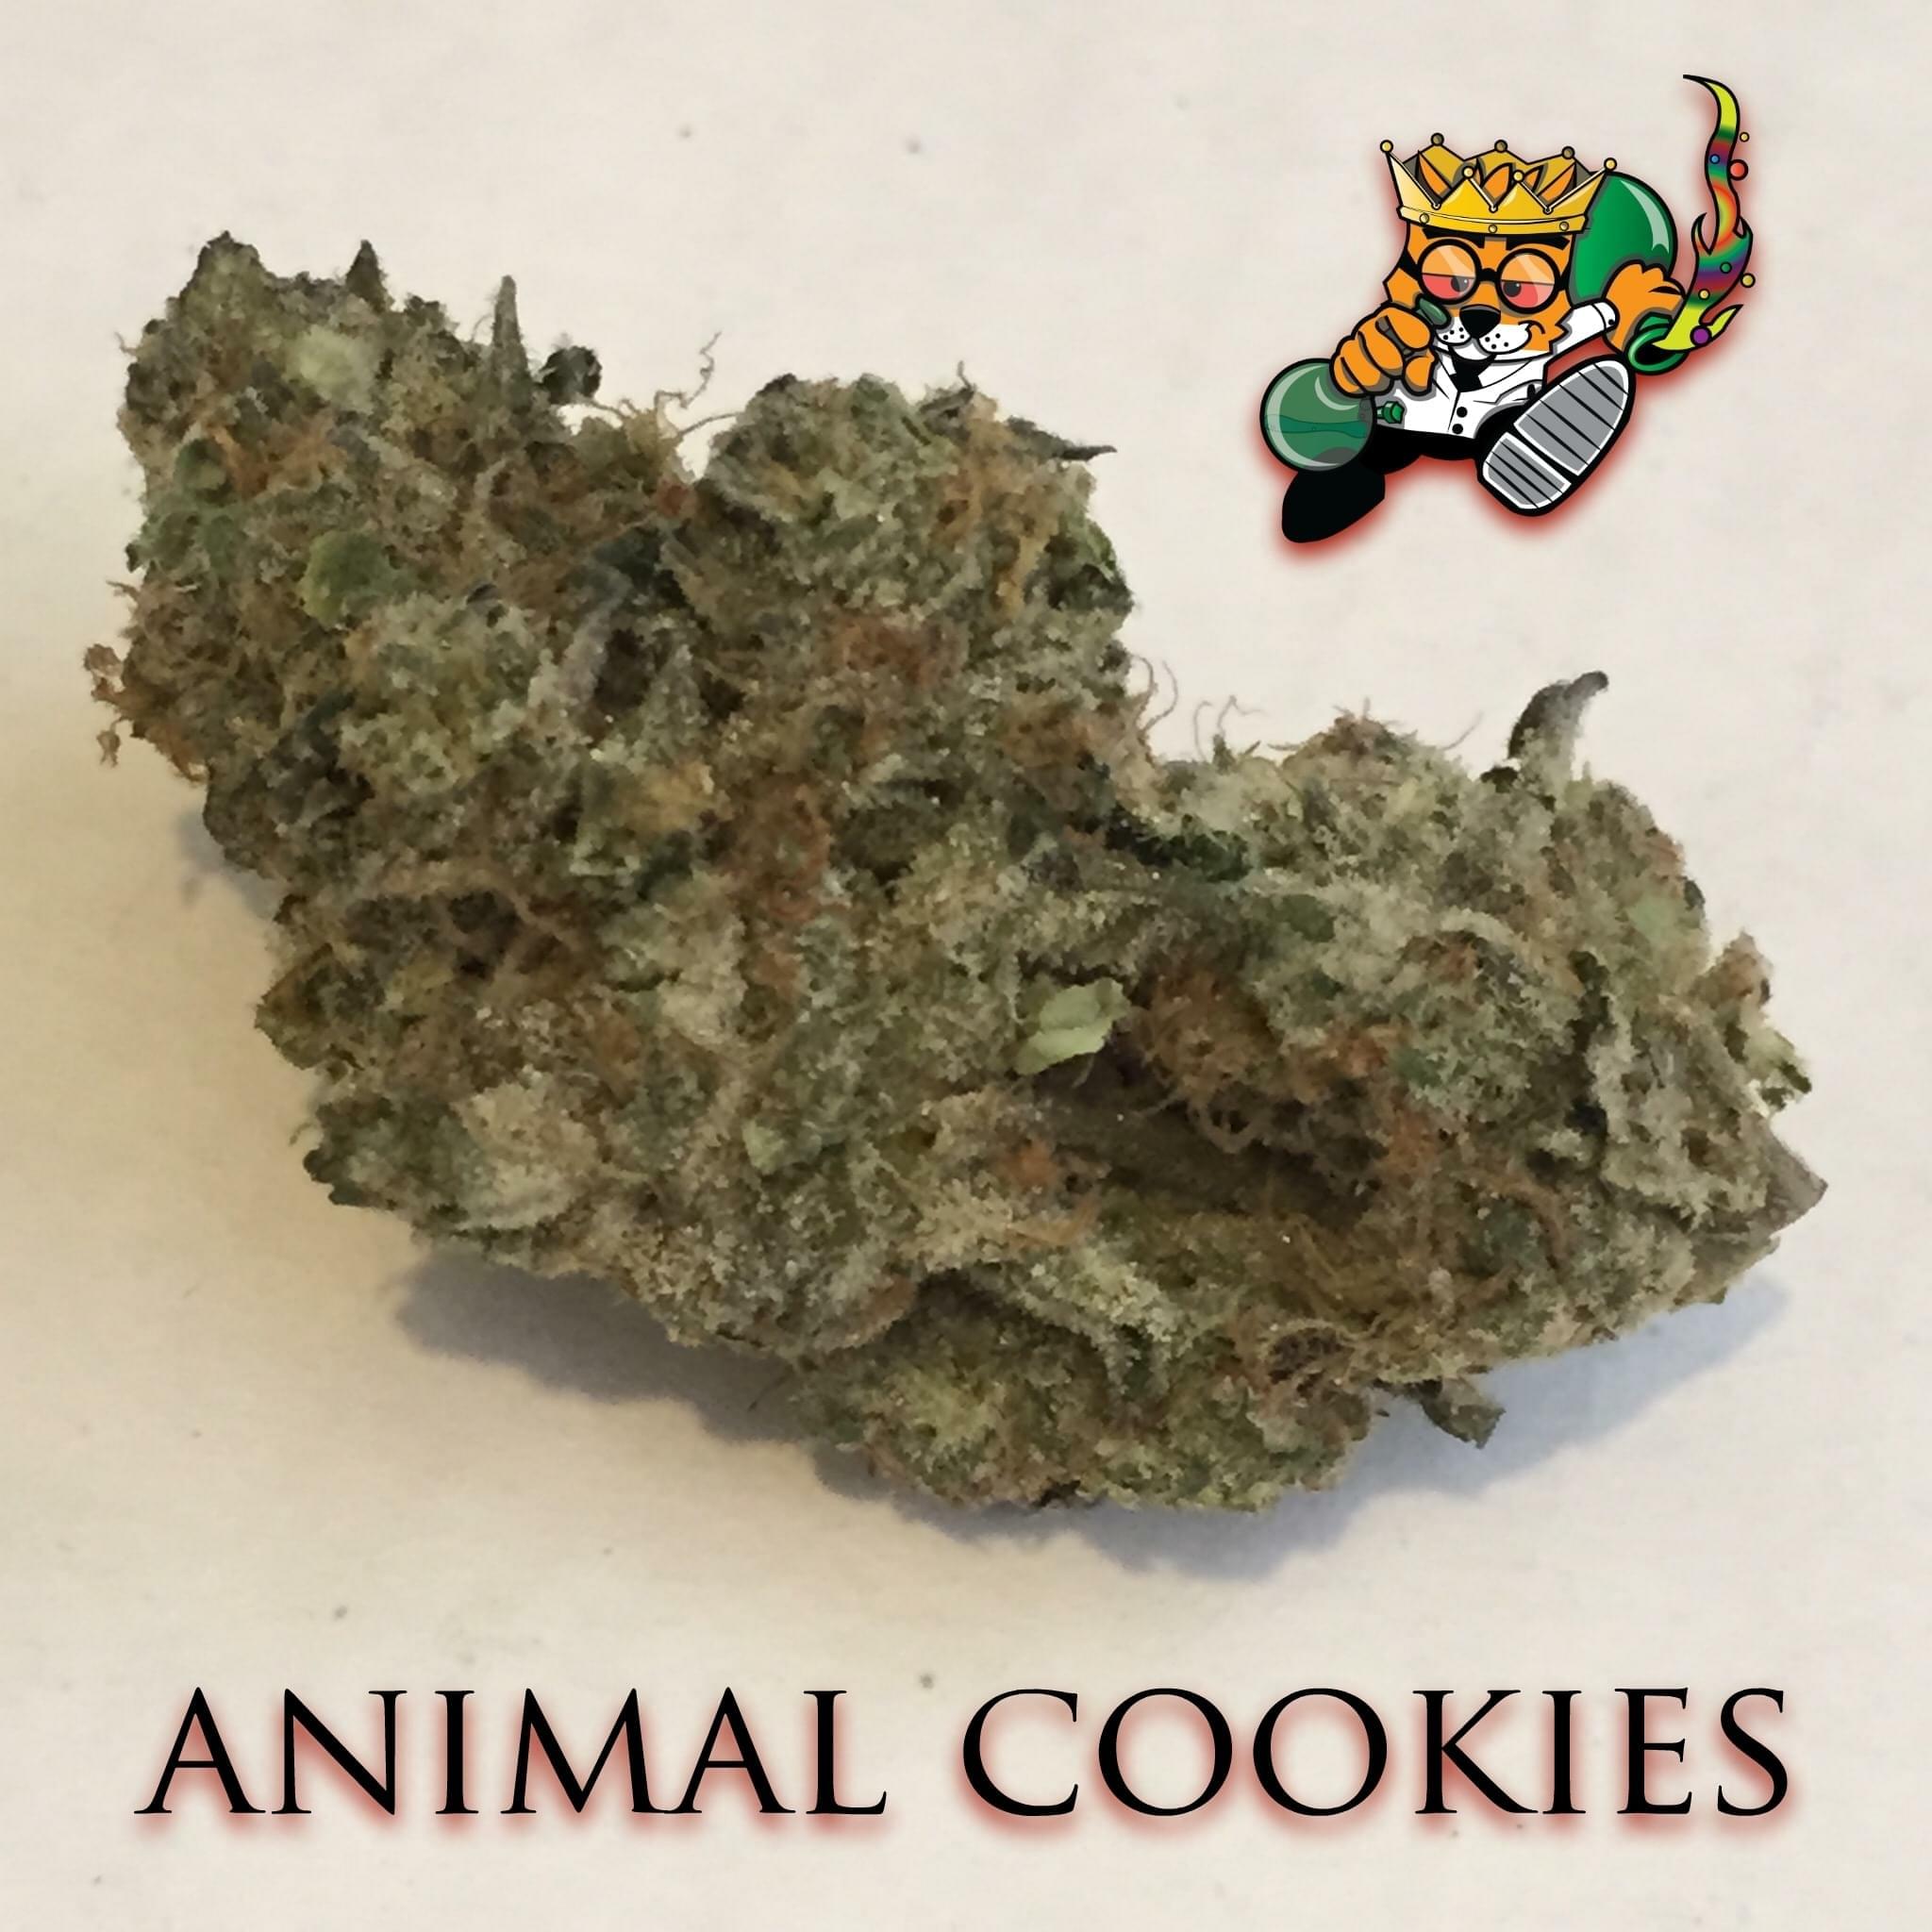 Animal Cookies image